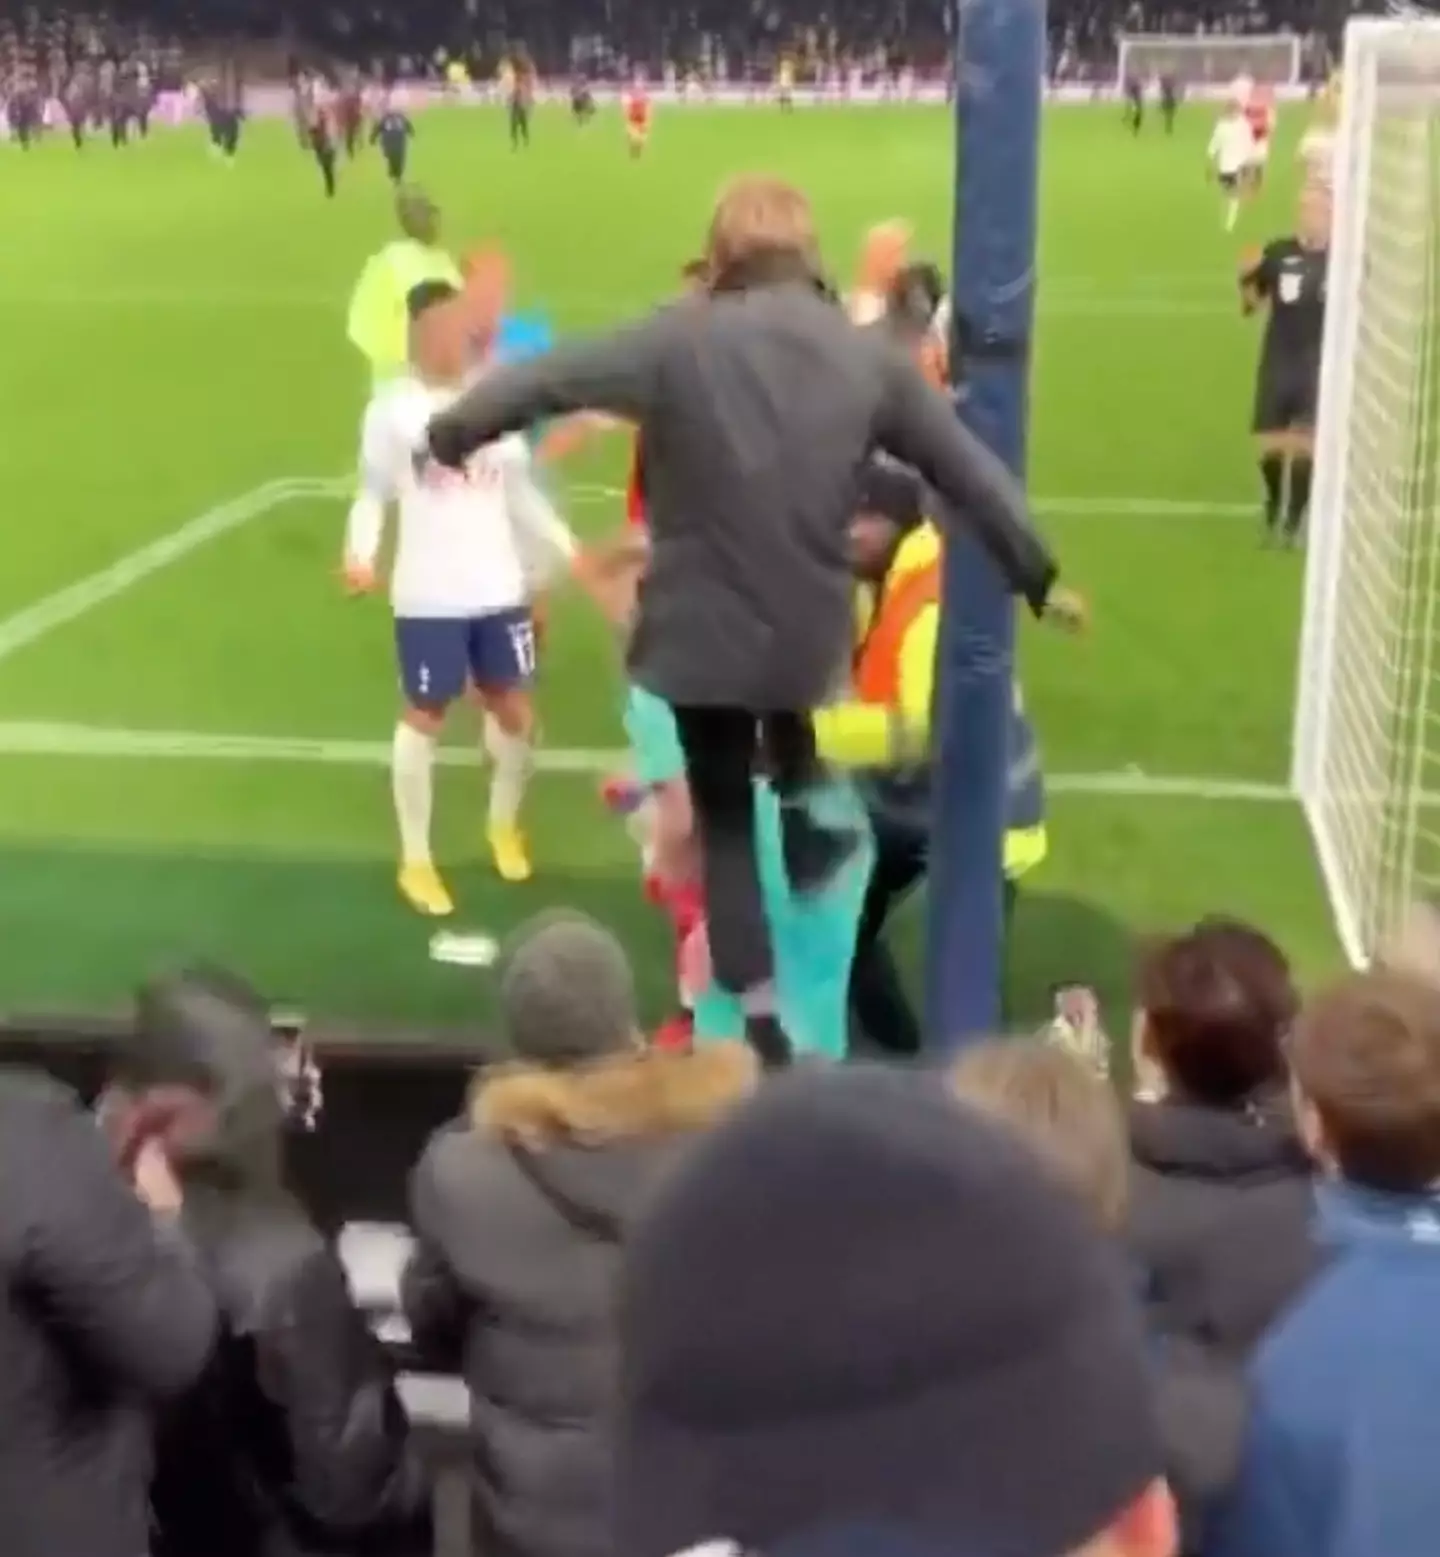 The fan was seen kicking the Arsenal goalkeeper.